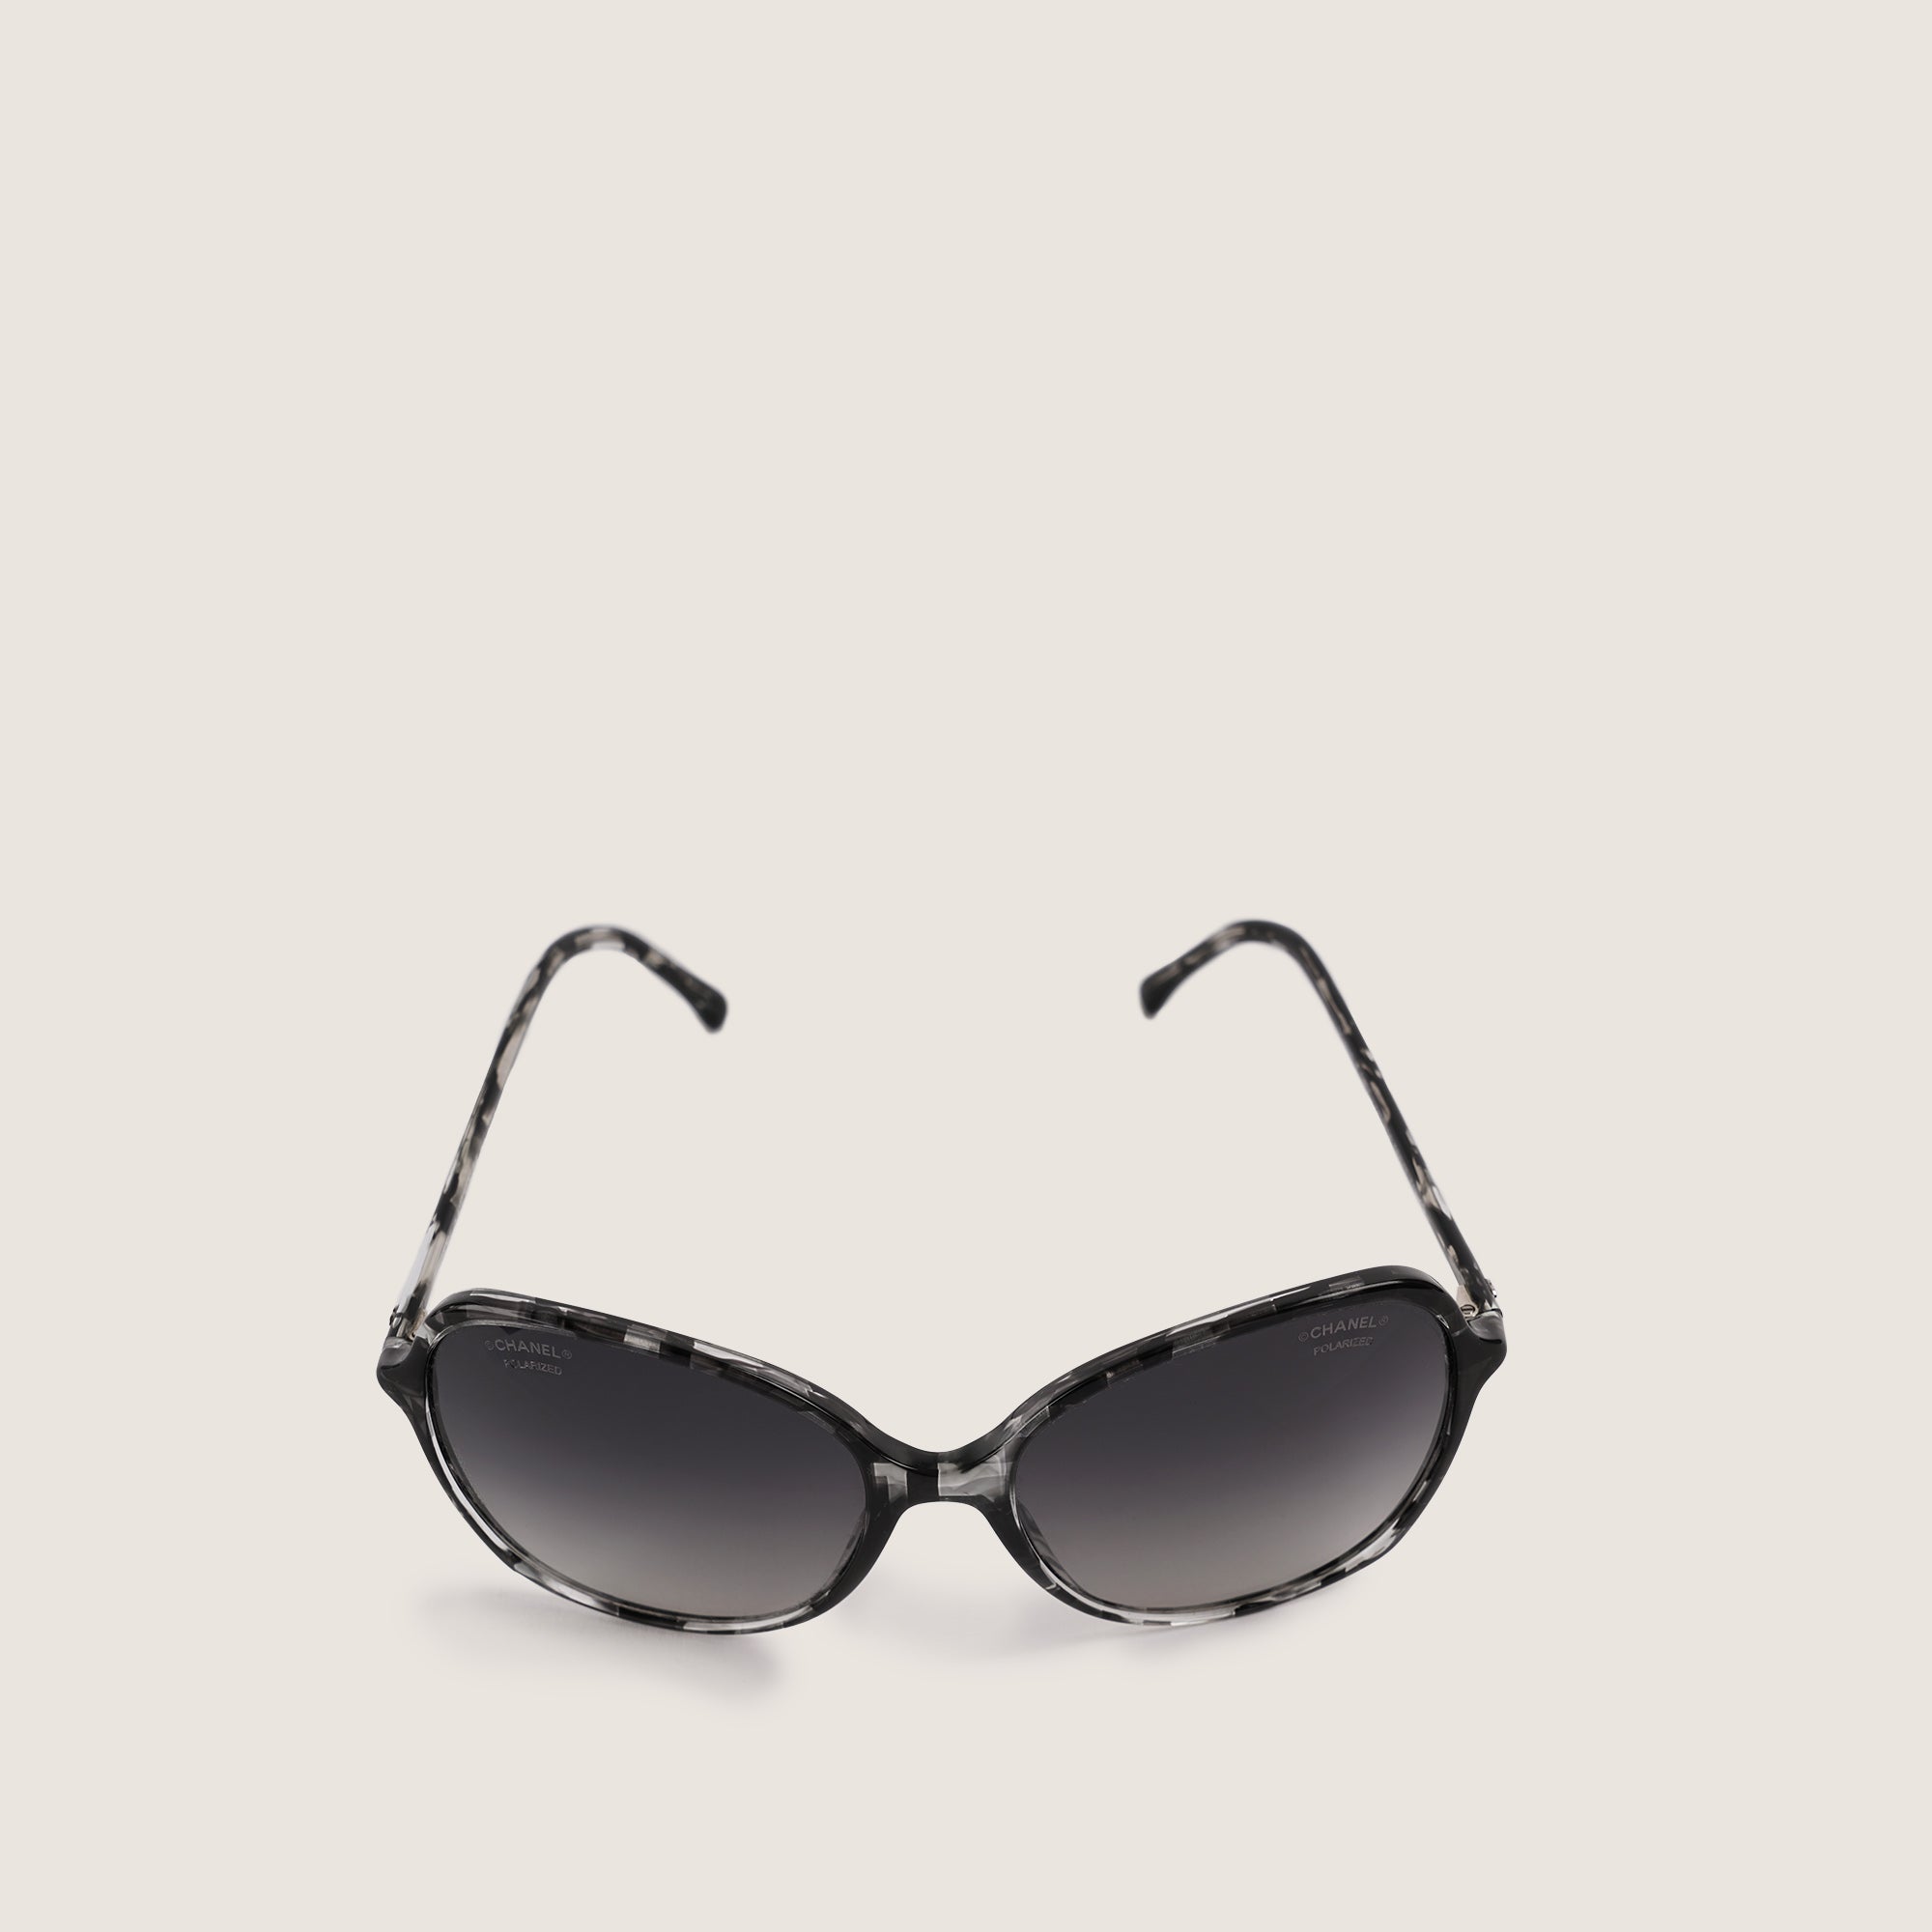 CC Tortoise Sunglasses - CHANEL - Affordable Luxury